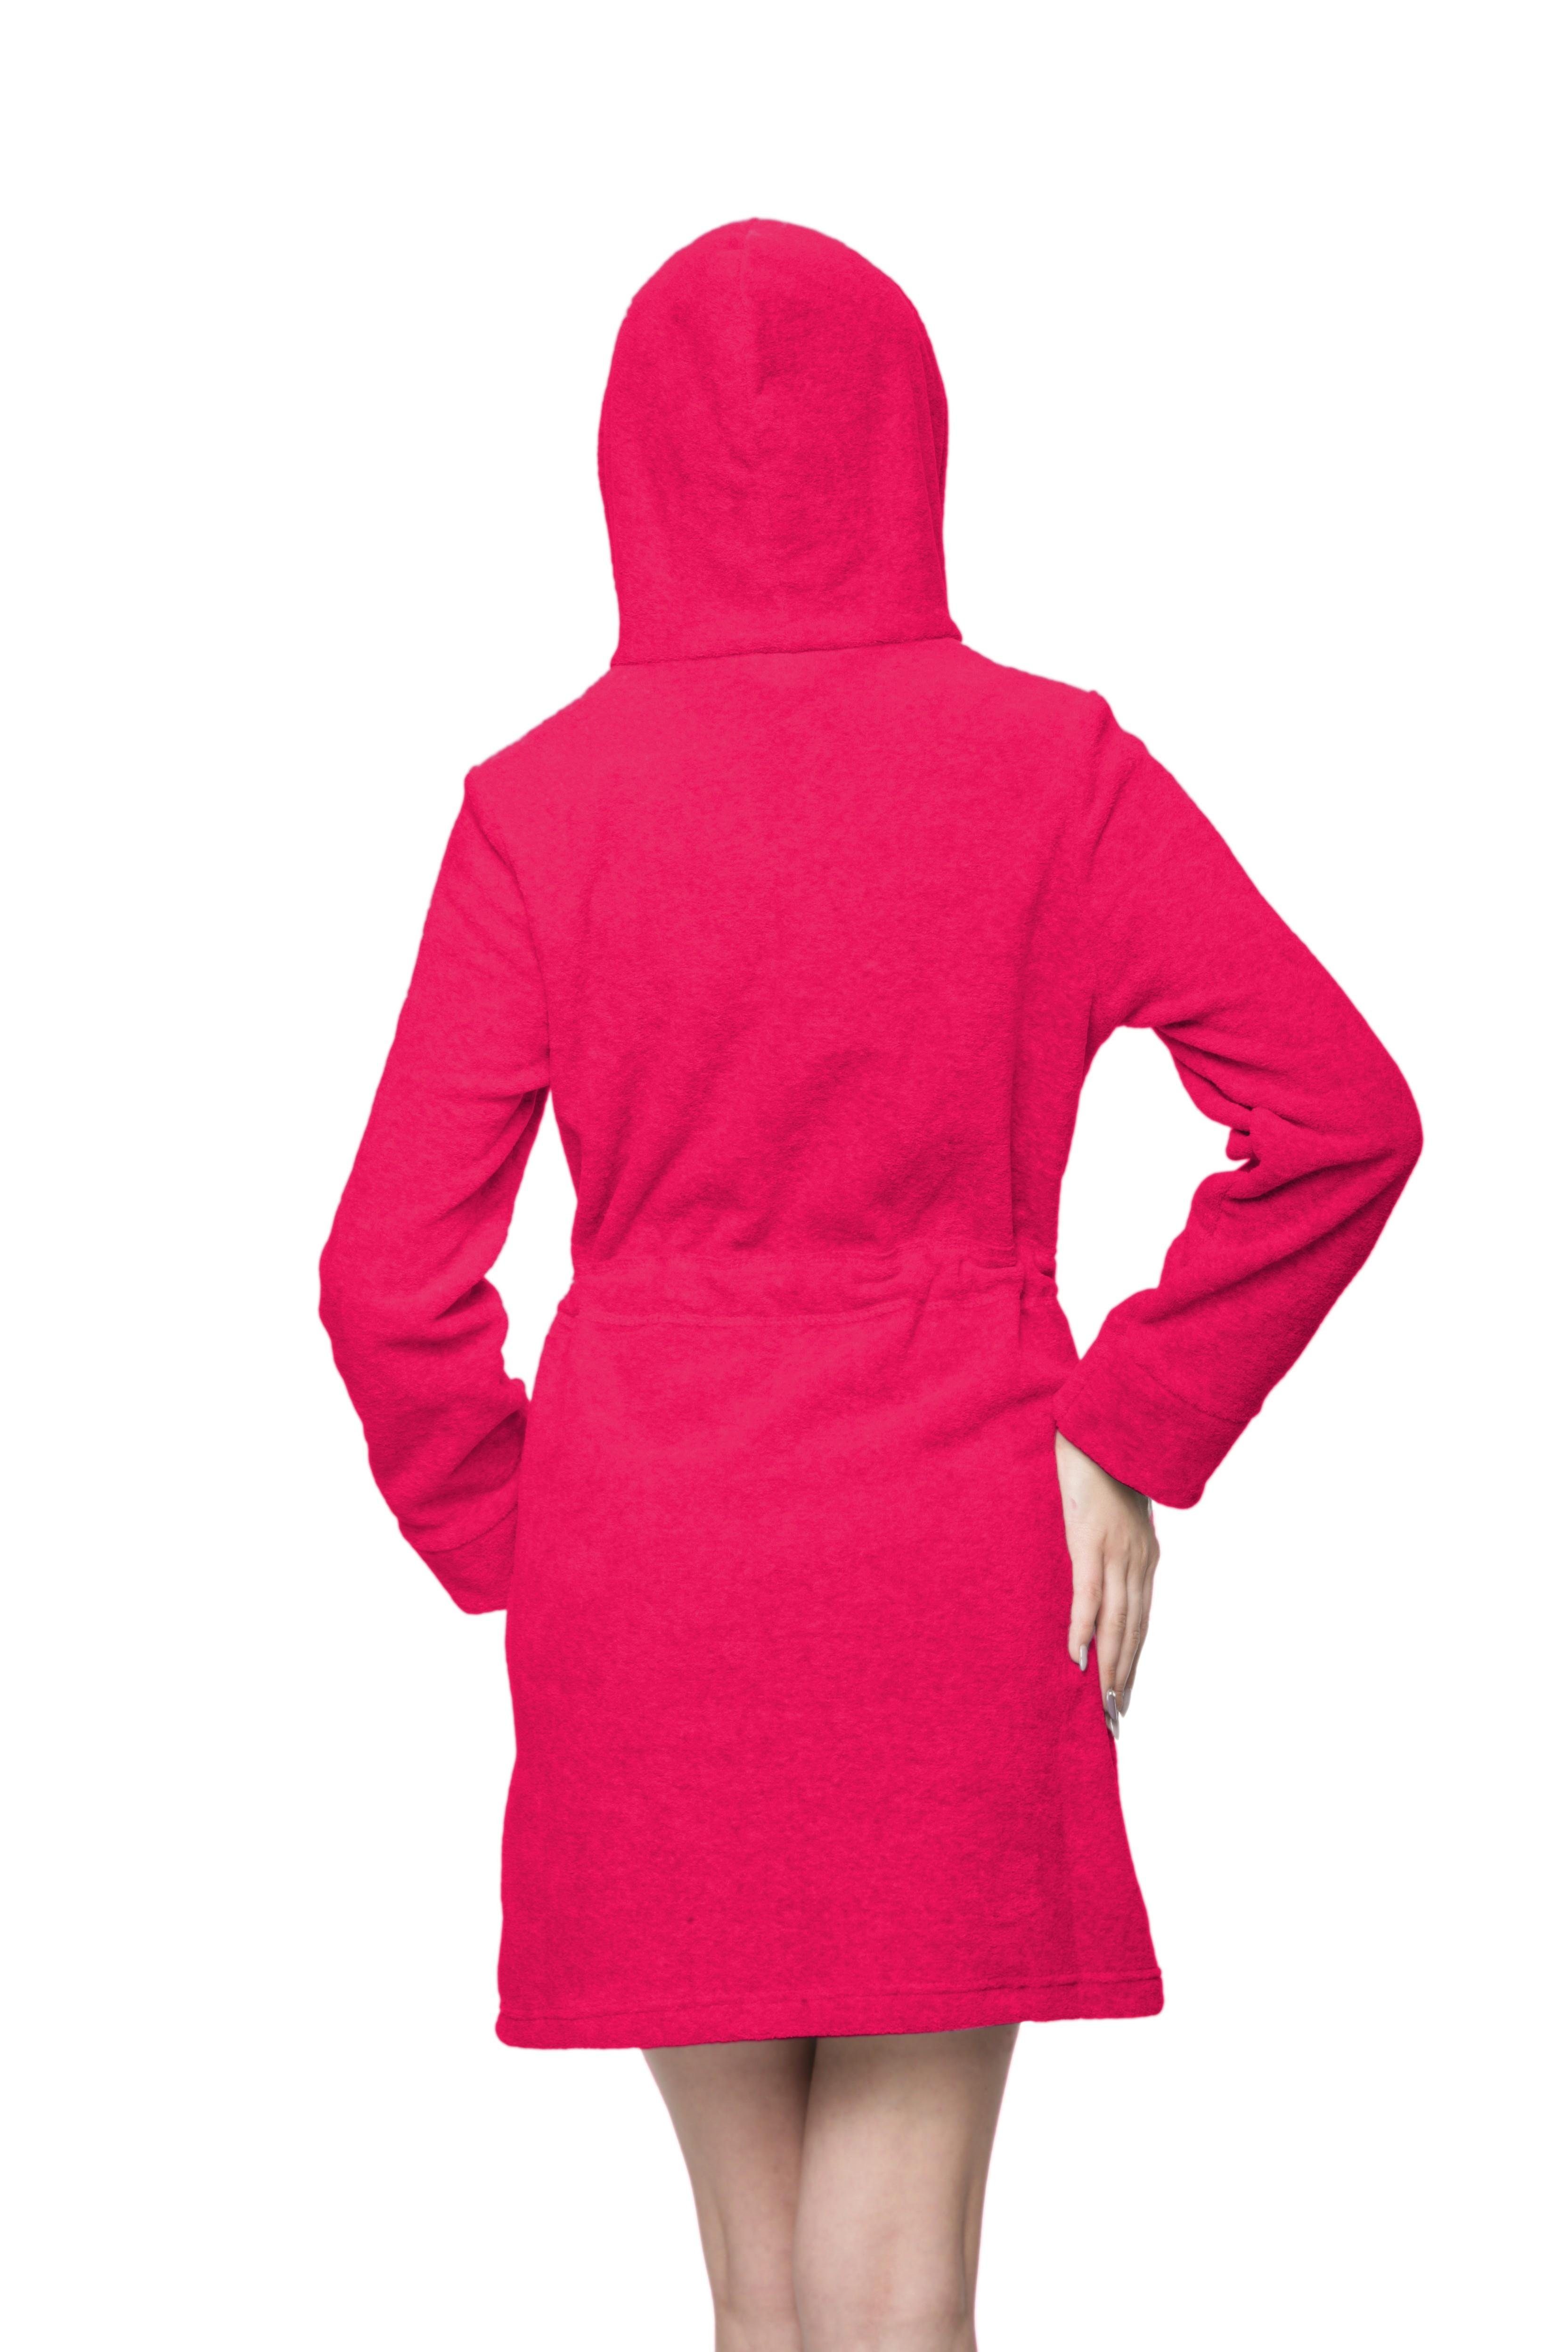 Reißverschluss Damen Aquarti mit Kapuze Pink Morgenmantel Bademantel Aquarti und Damenbademantel